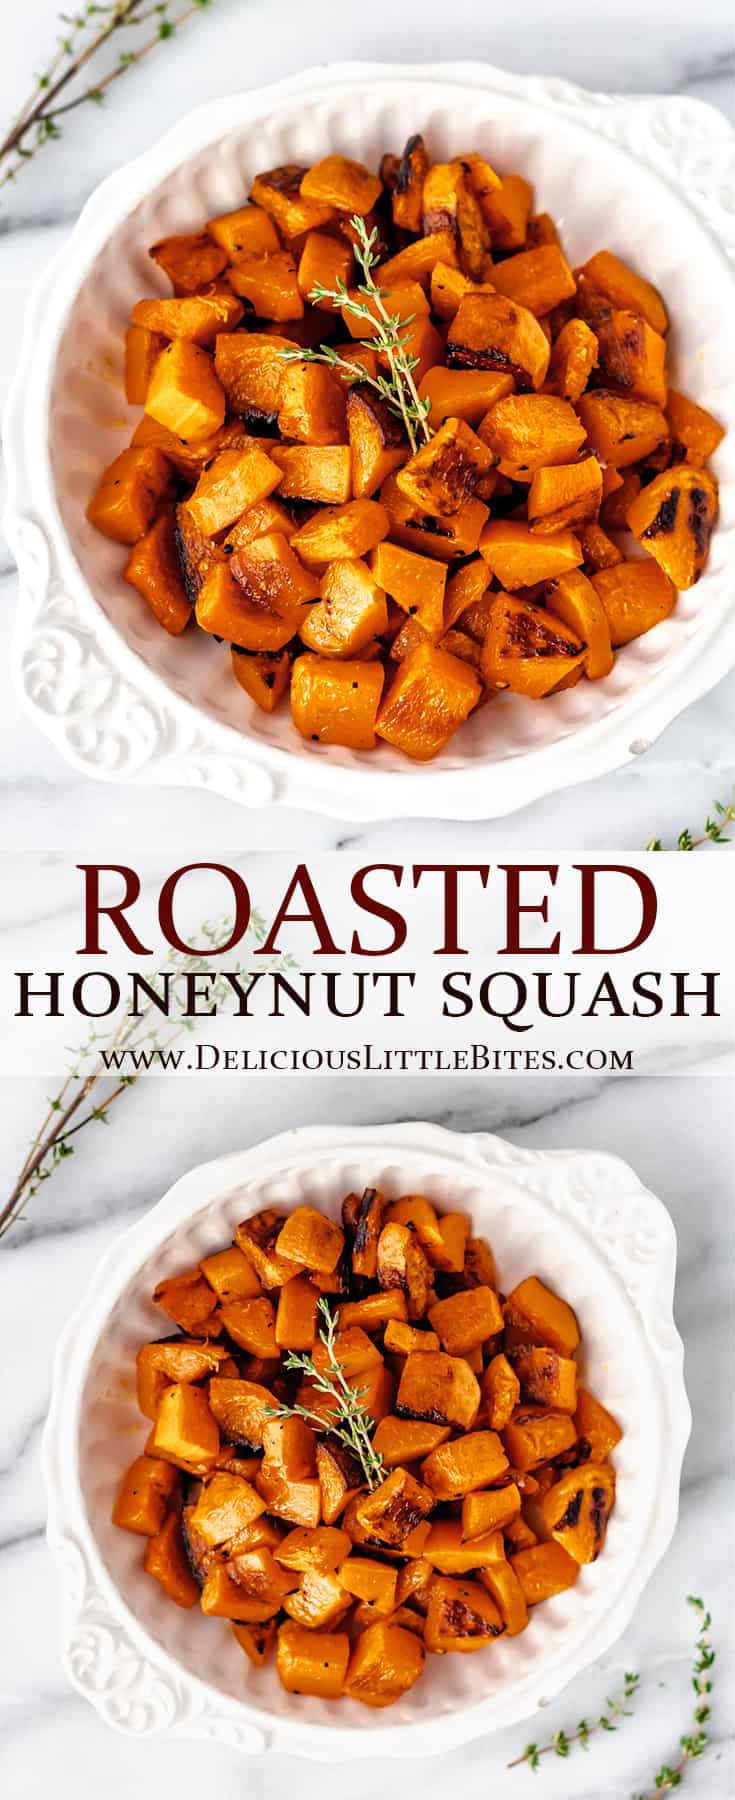 Roasted Honeynut Squash - Delicious Little Bites